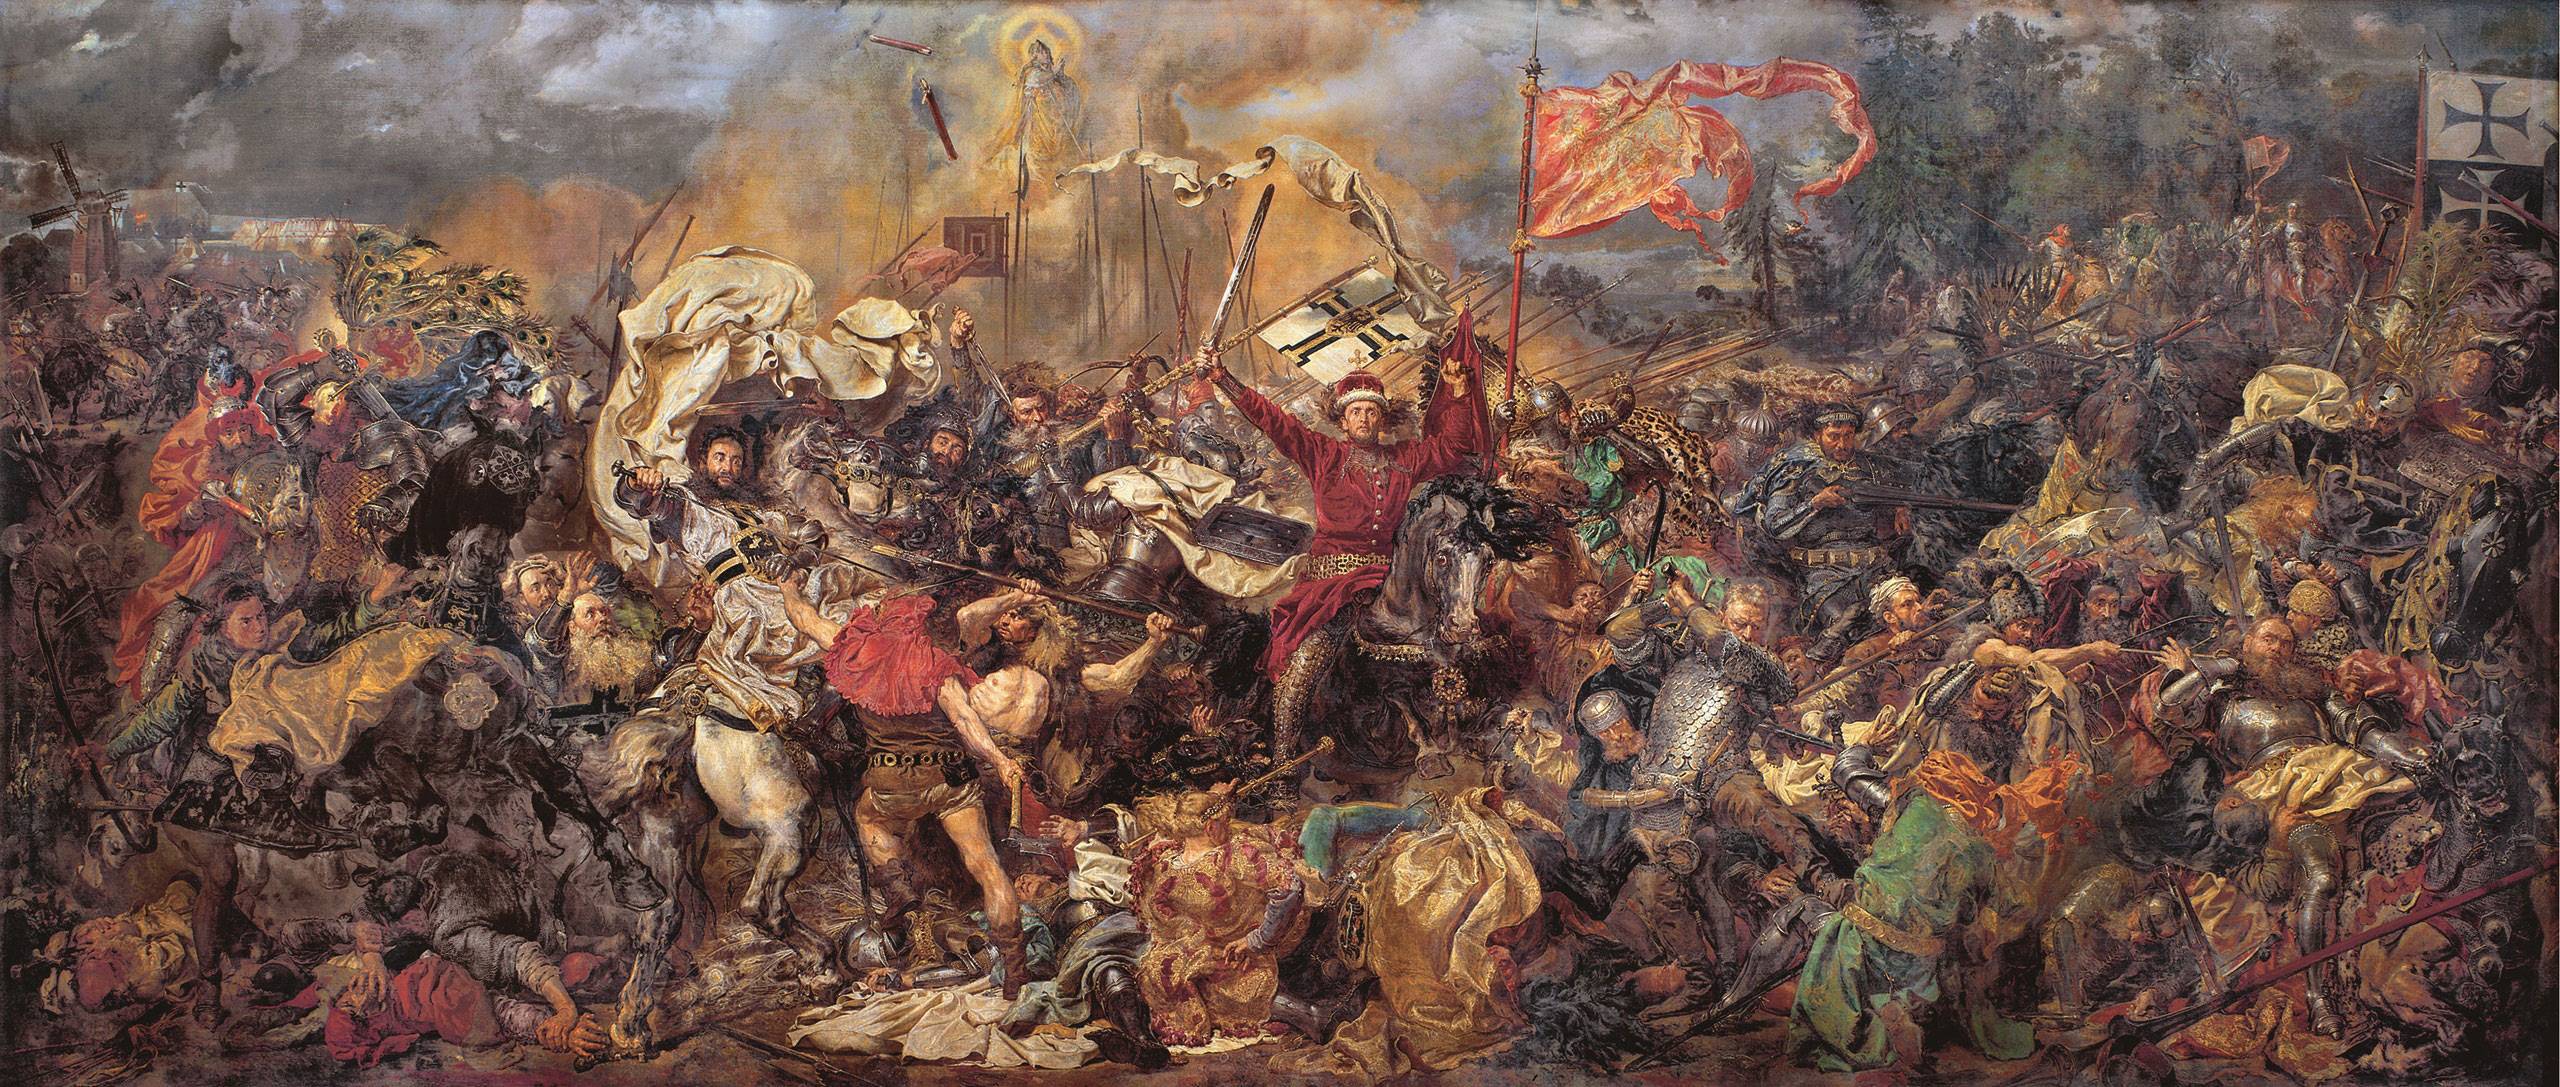 Artistic Battle Of Grunwald HD Wallpaper | Background Image